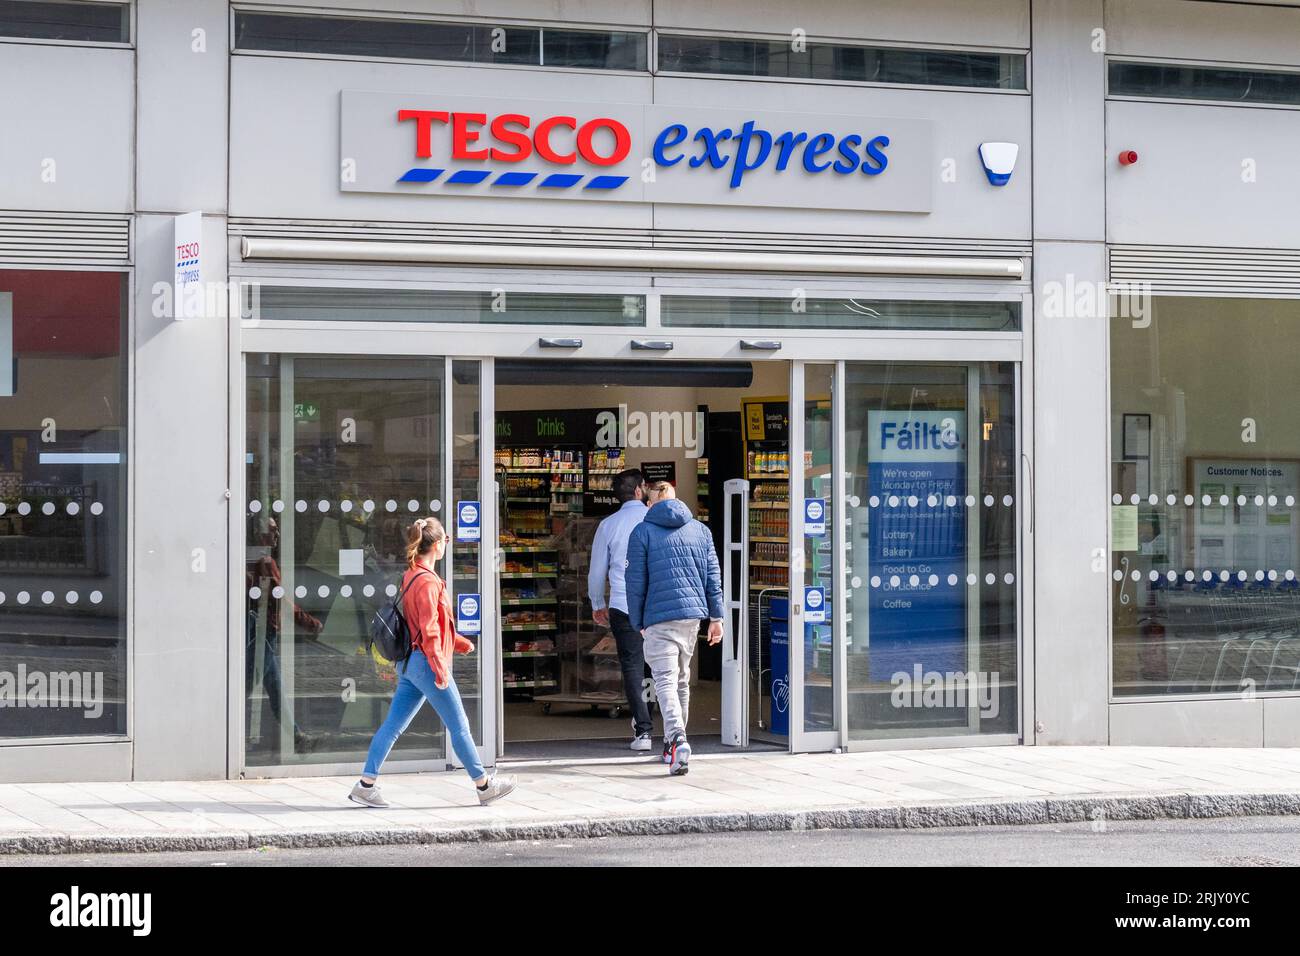 Tesco Express supermarket in Dublin, Ireland. Stock Photo